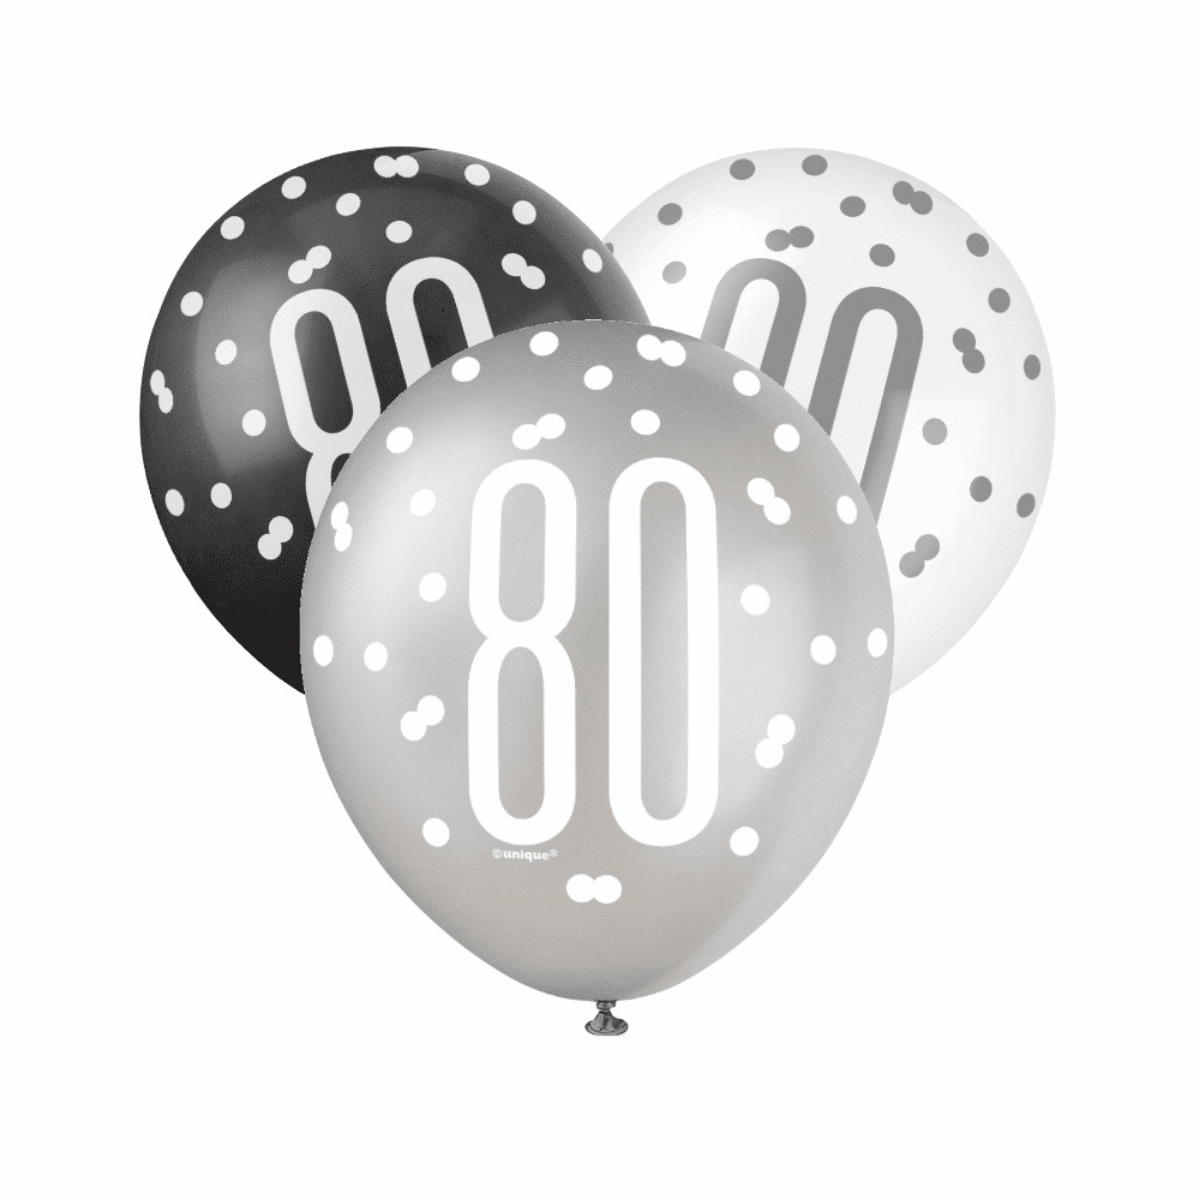 Black, Silver, & White Latex Balloons 80th